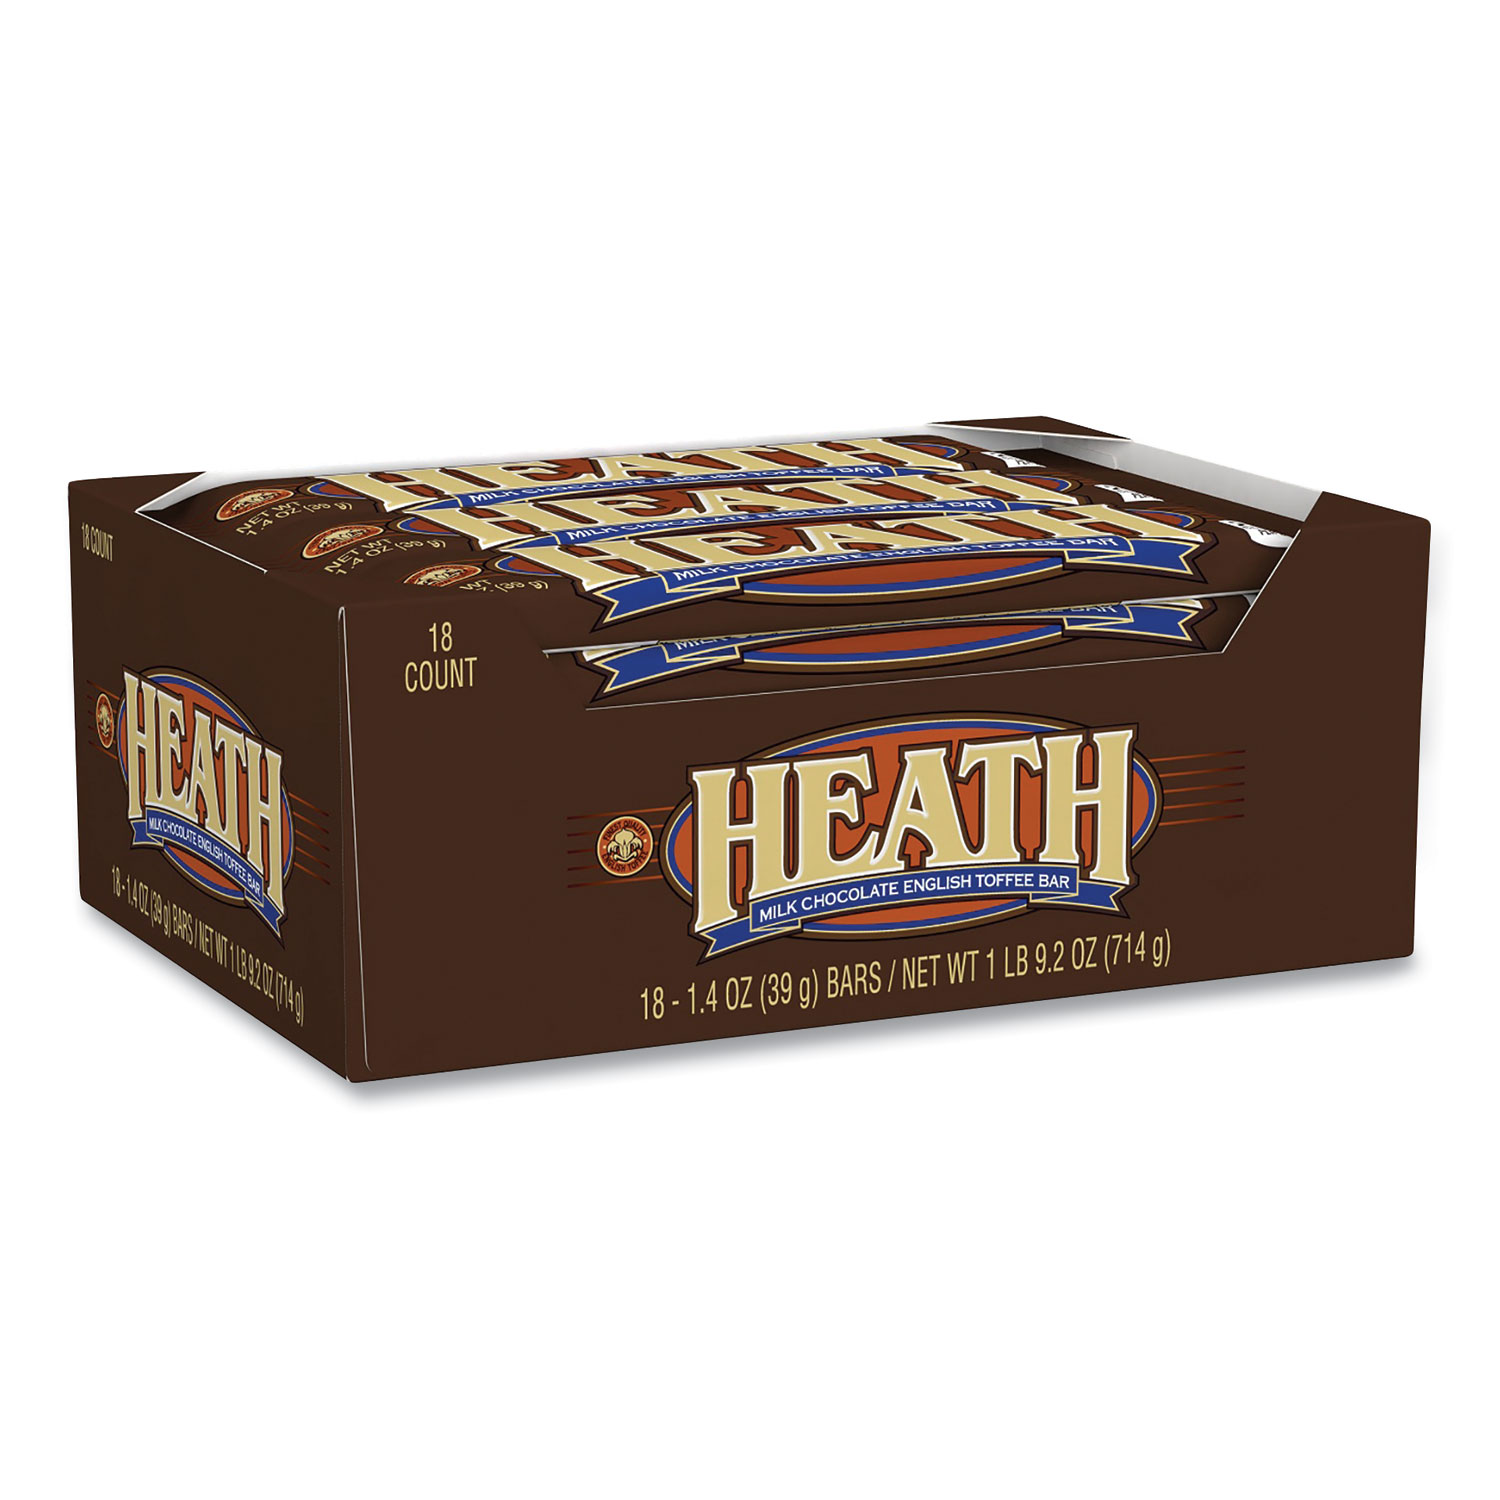  HEATH 6147 Milk Chocolate English Toffee Candy Bar, 1.4 oz Bar, 18 Bars/Box, Free Delivery in 1-4 Business Days (GRR24600206) 